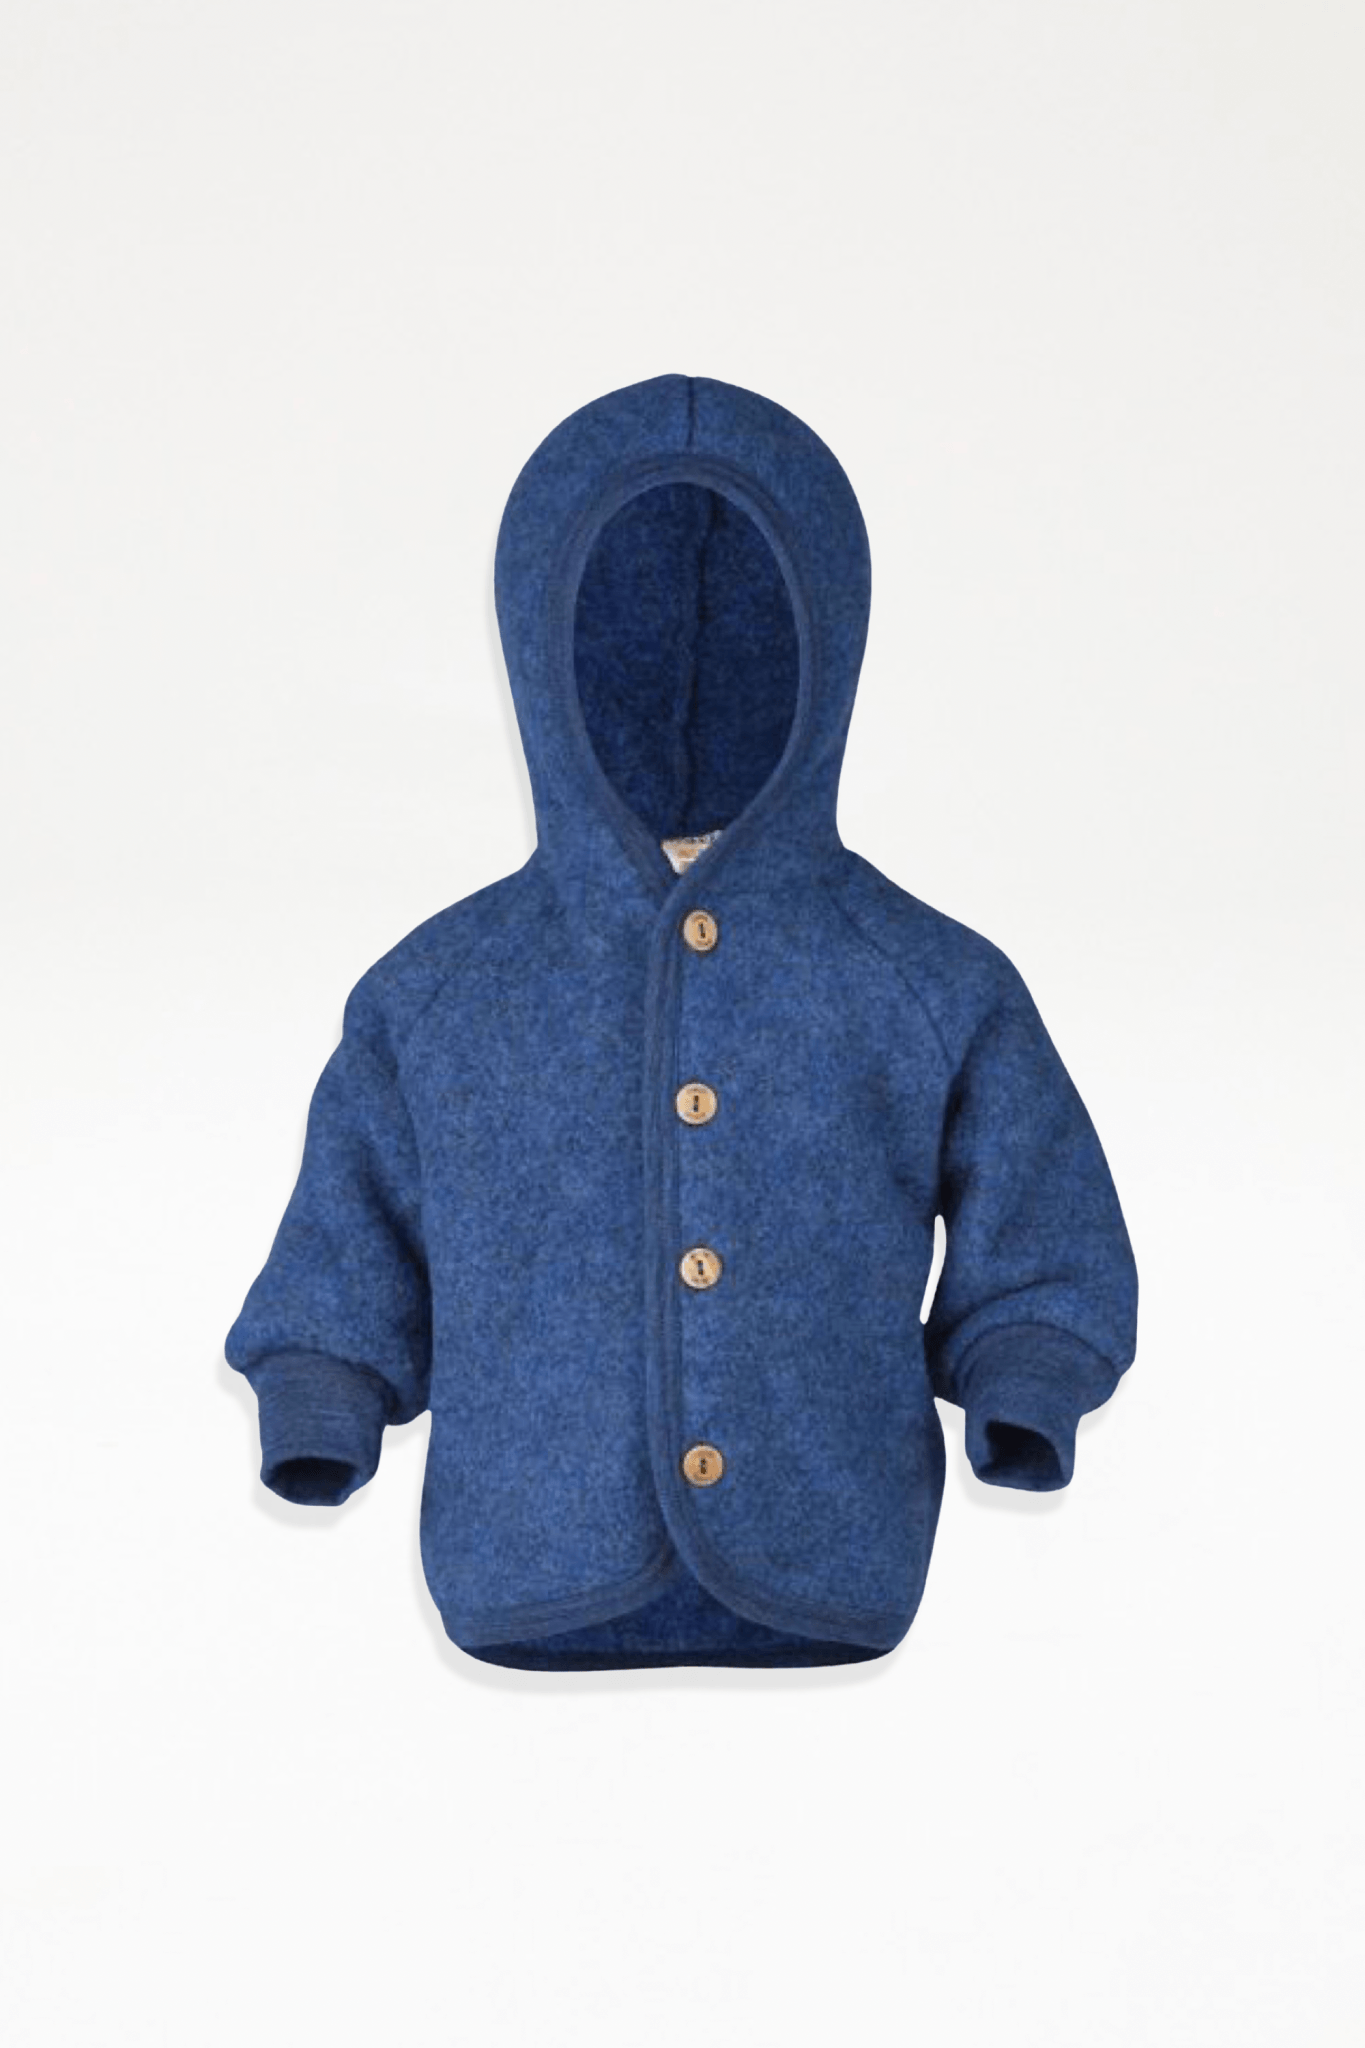 Engel - Baby Organic Wool Jacket - Blue Melange - Ensemble Studios